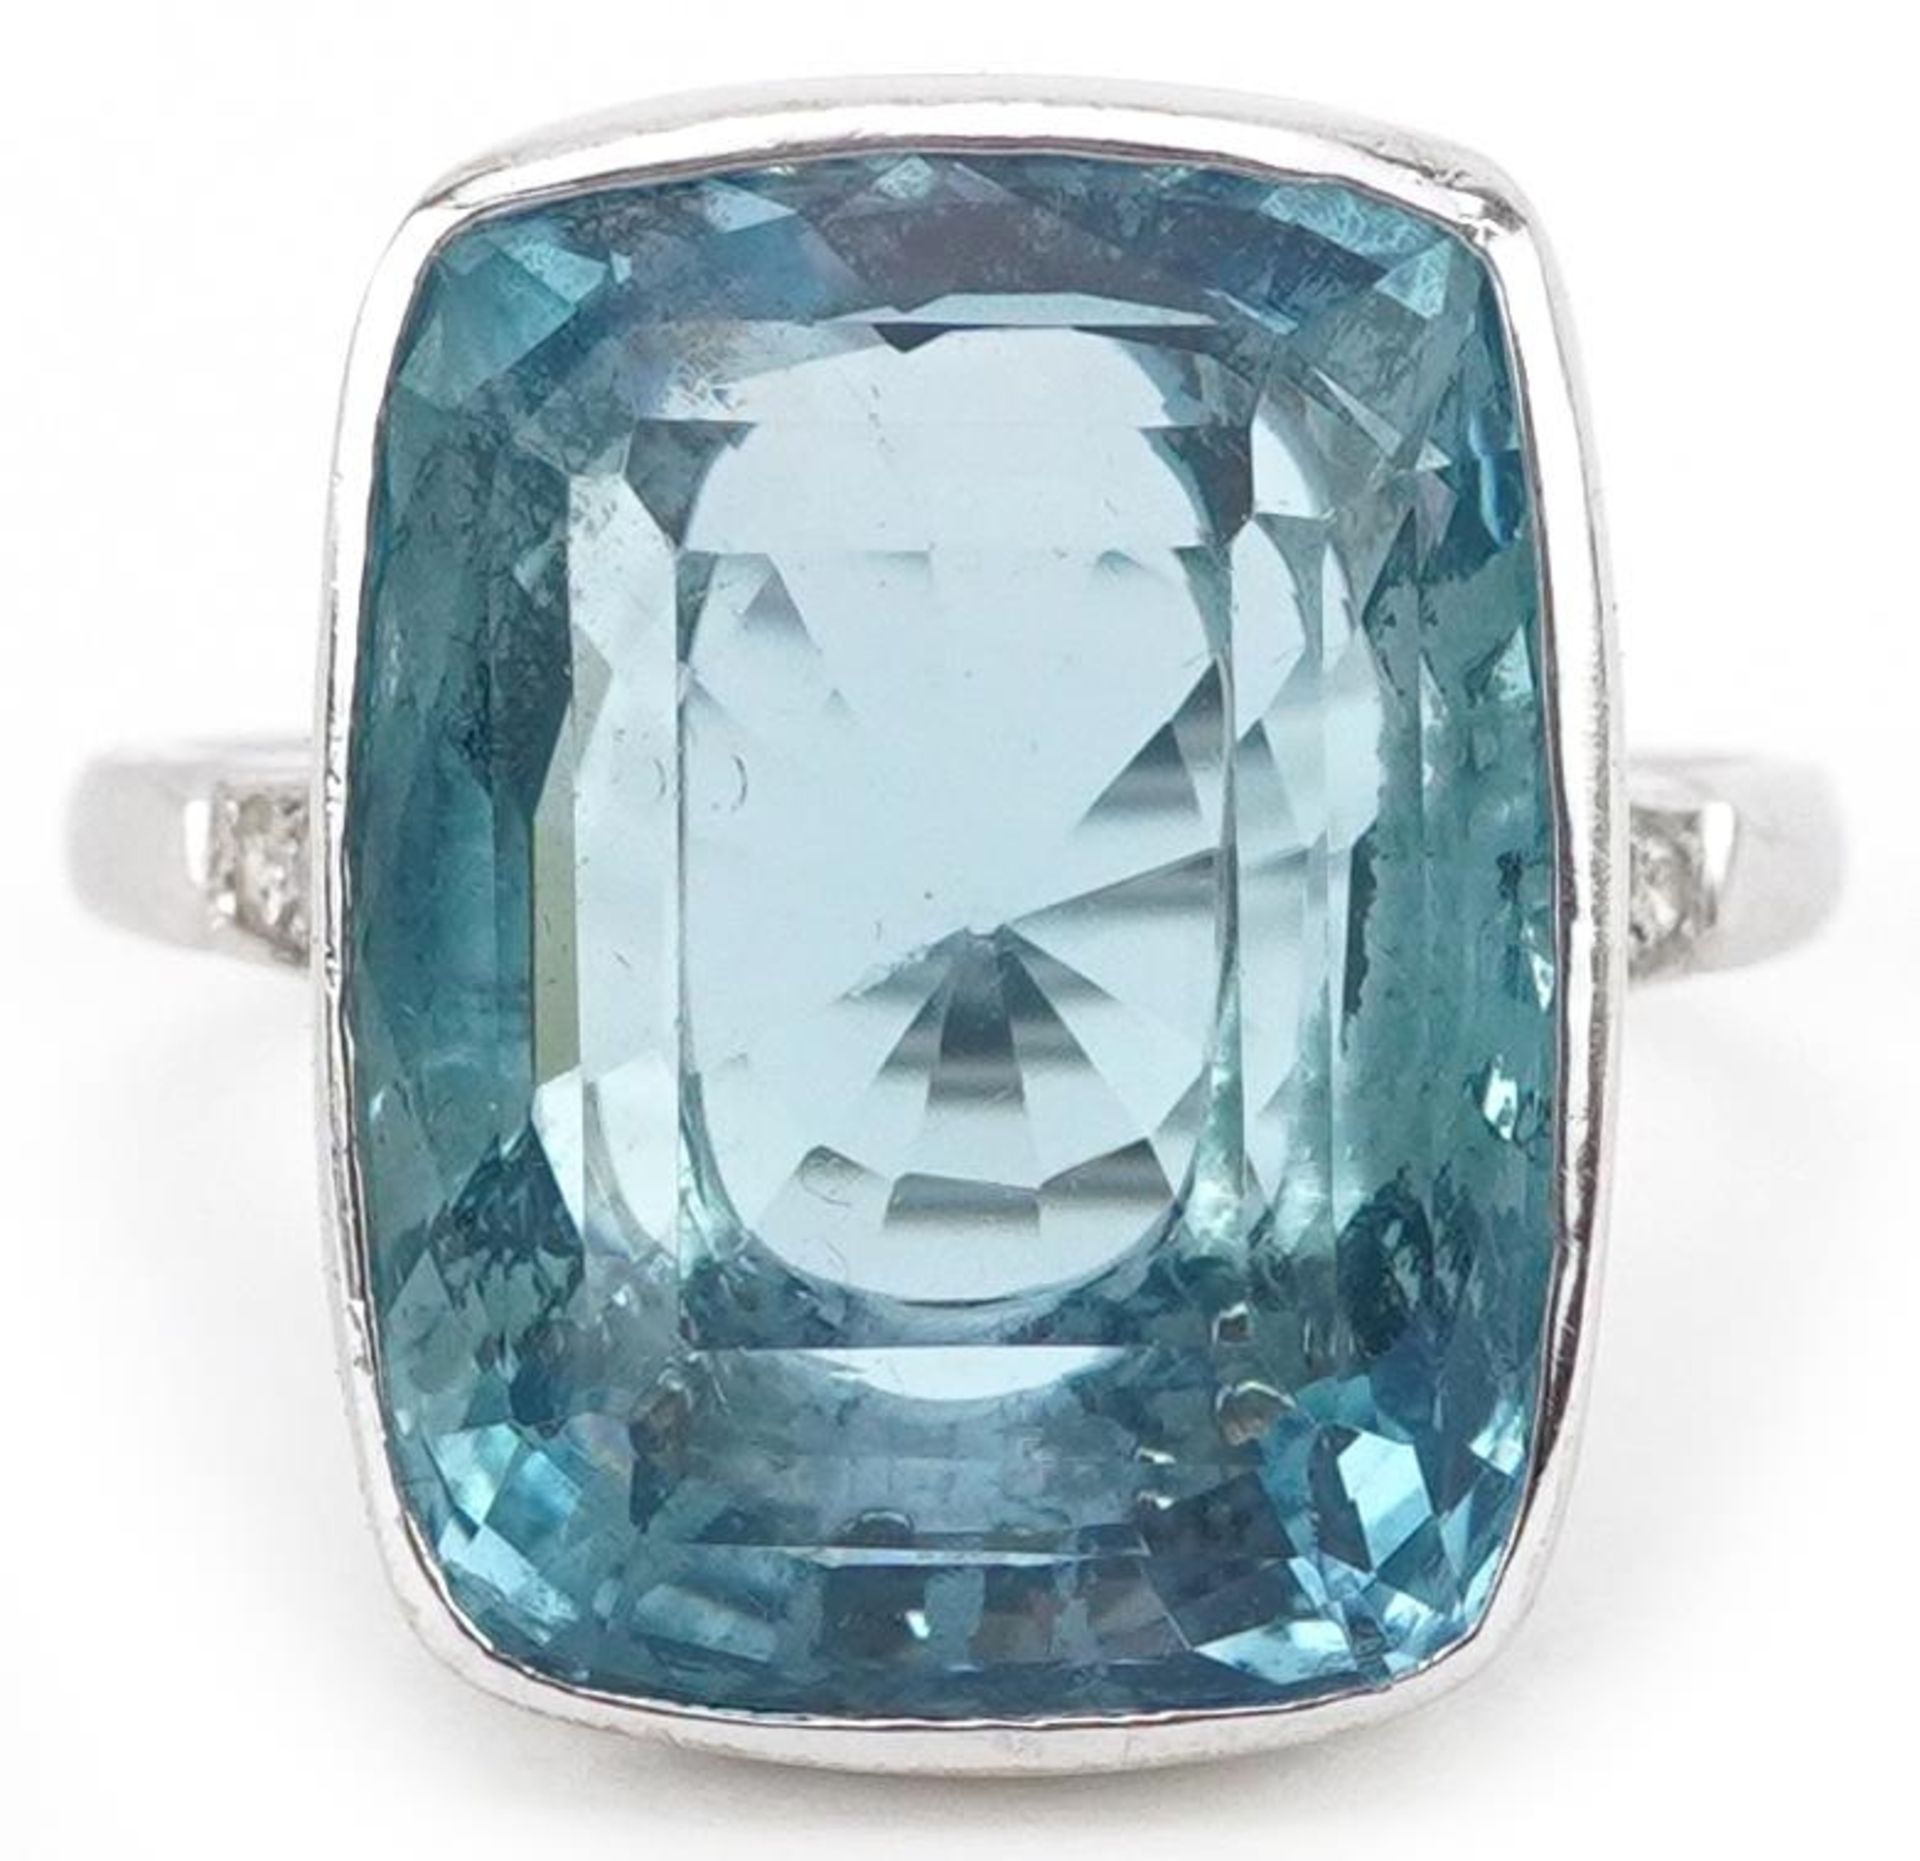 Art Deco style 18ct white gold aquamarine ring with diamond set shoulders, the aquamarine